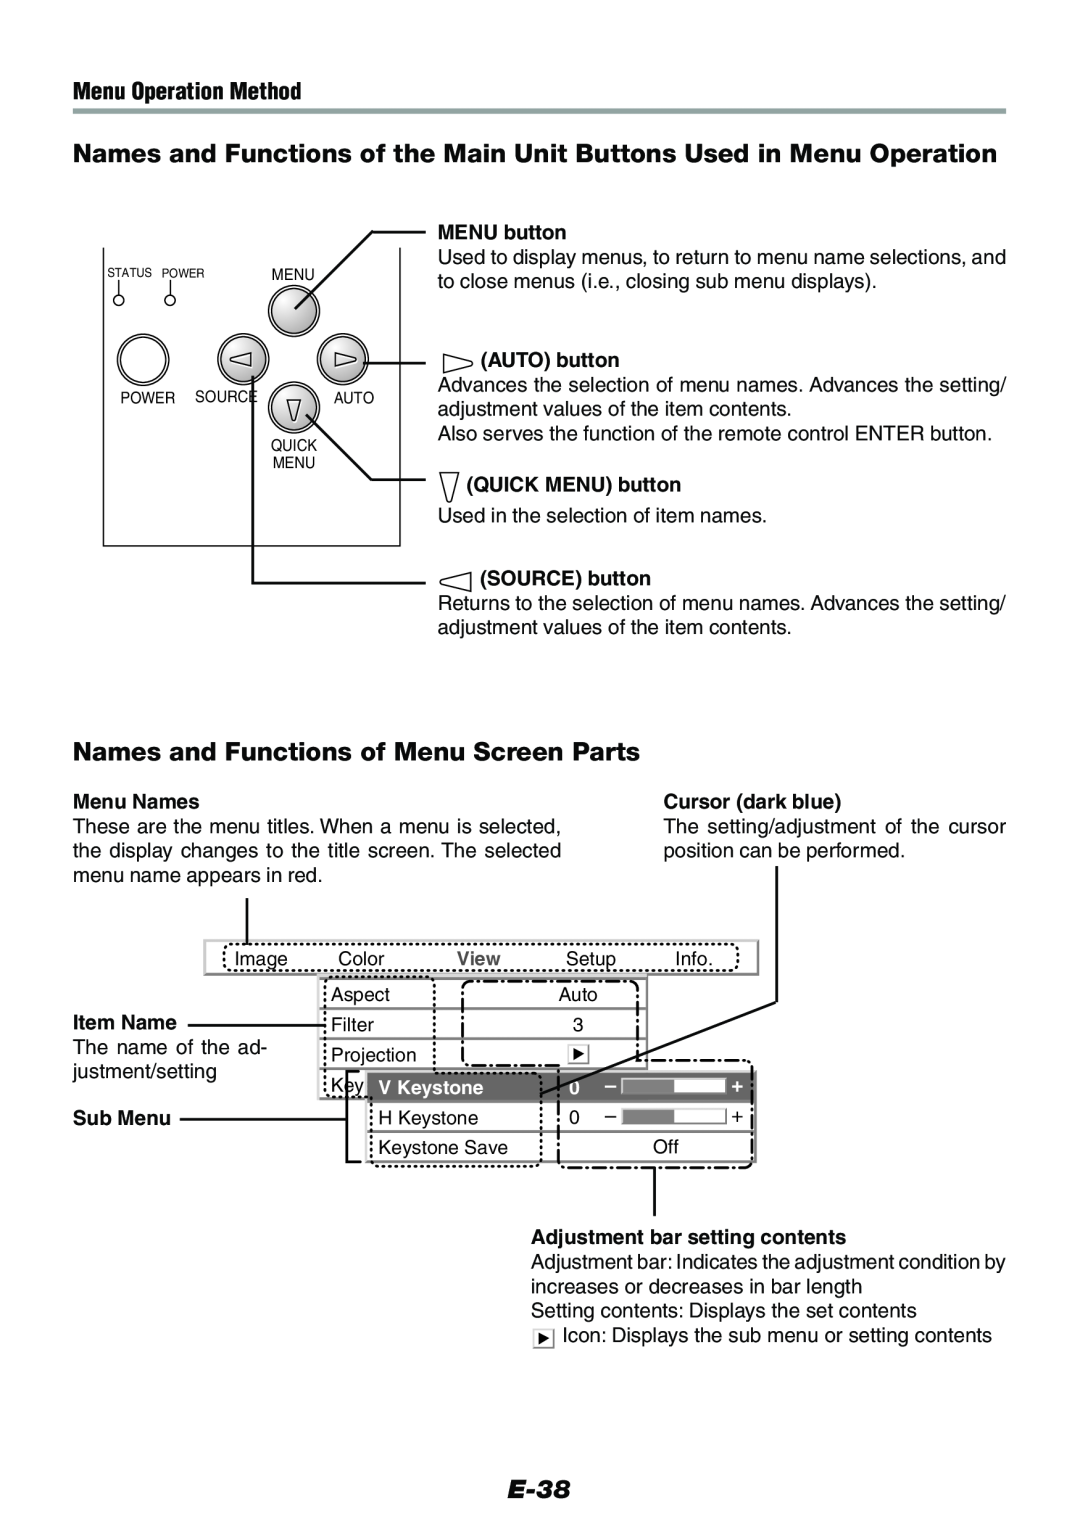 Epson V-1100 Names and Functions of Menu Screen Parts, E-38, Menu Operation Method, MENU button, AUTO button, Menu Names 